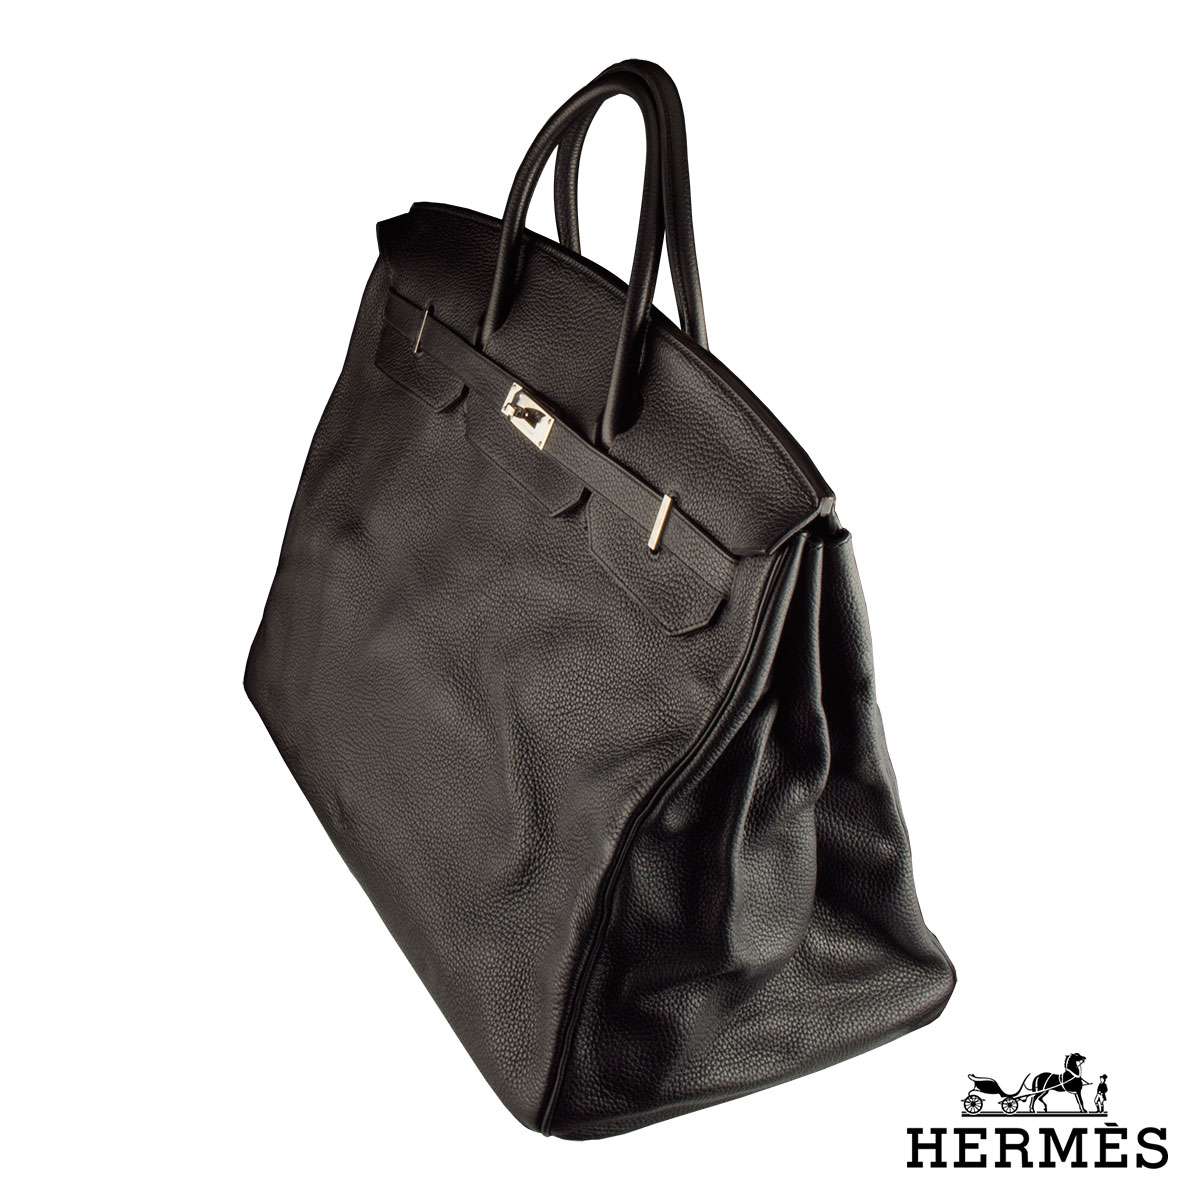 Hermés 55cm Travel Birkin Bag